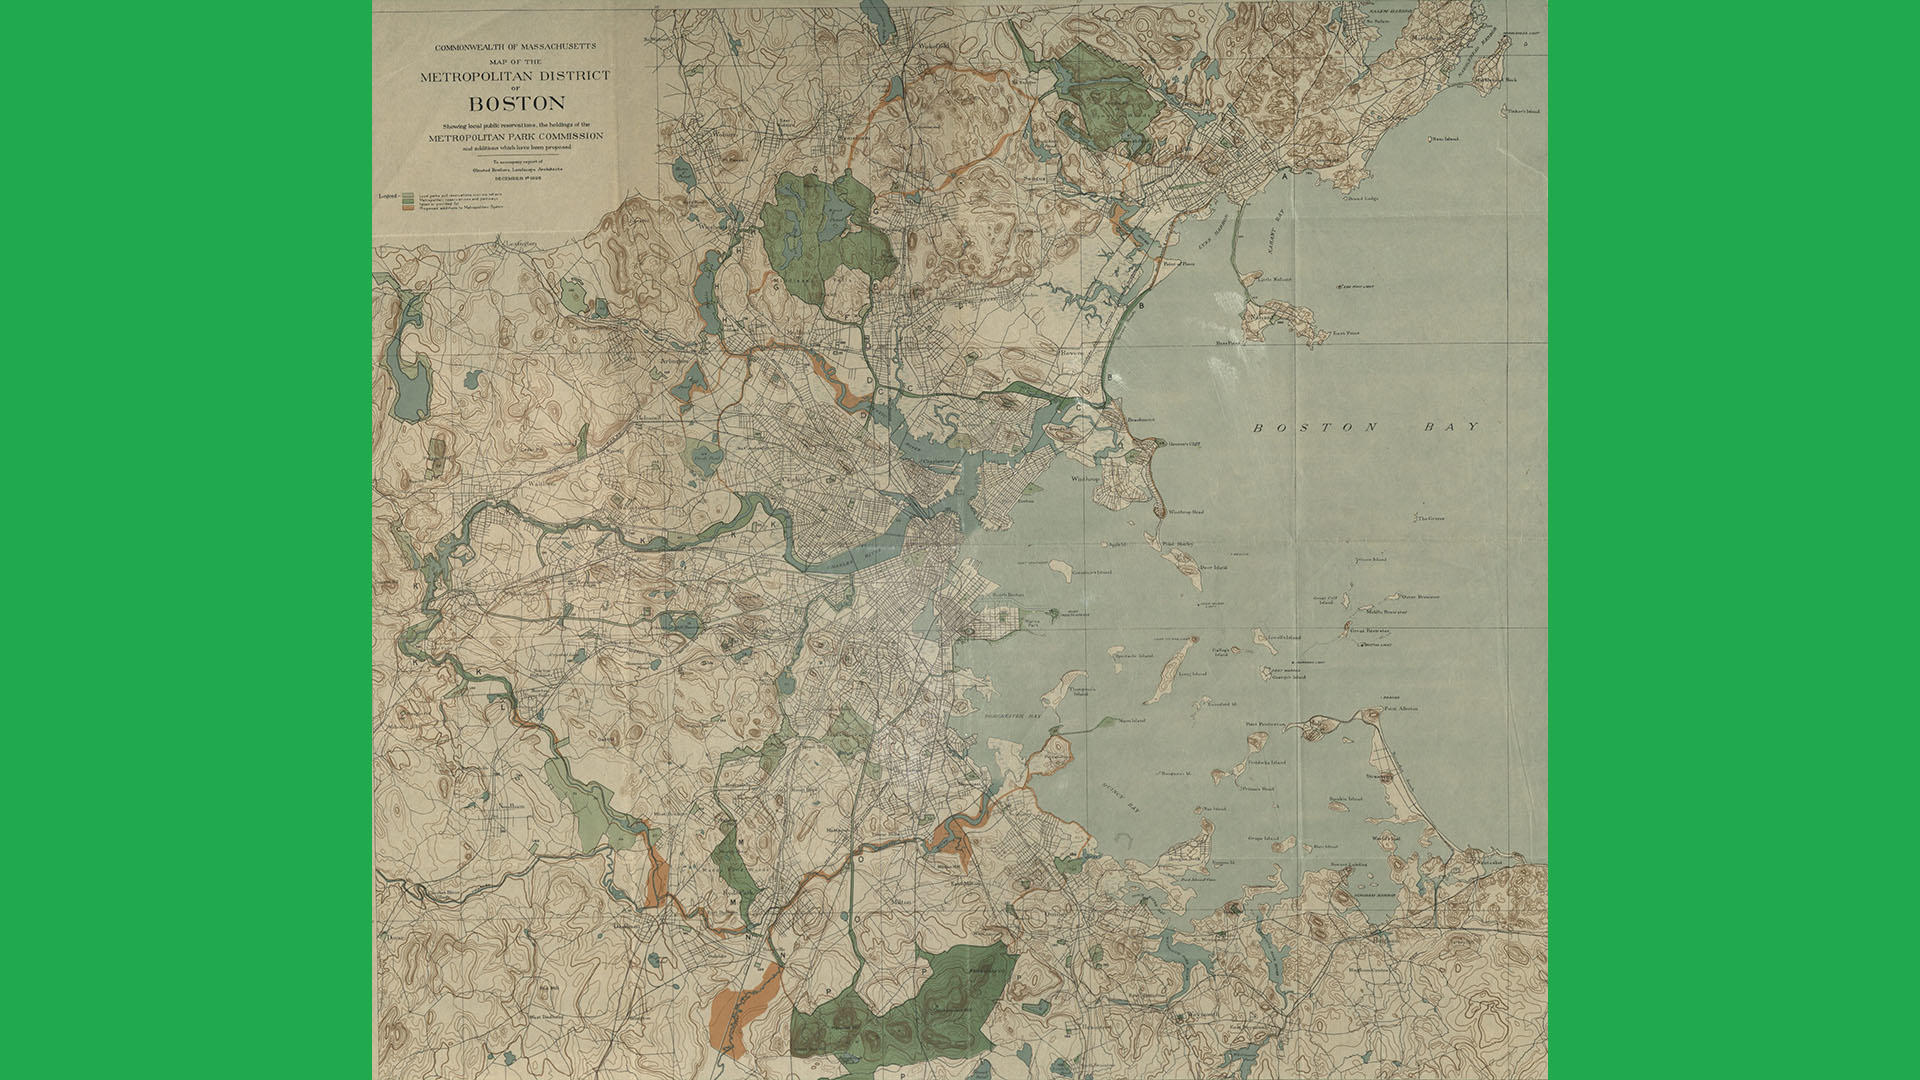 Map of the Metropolitan District of Boston, 1898